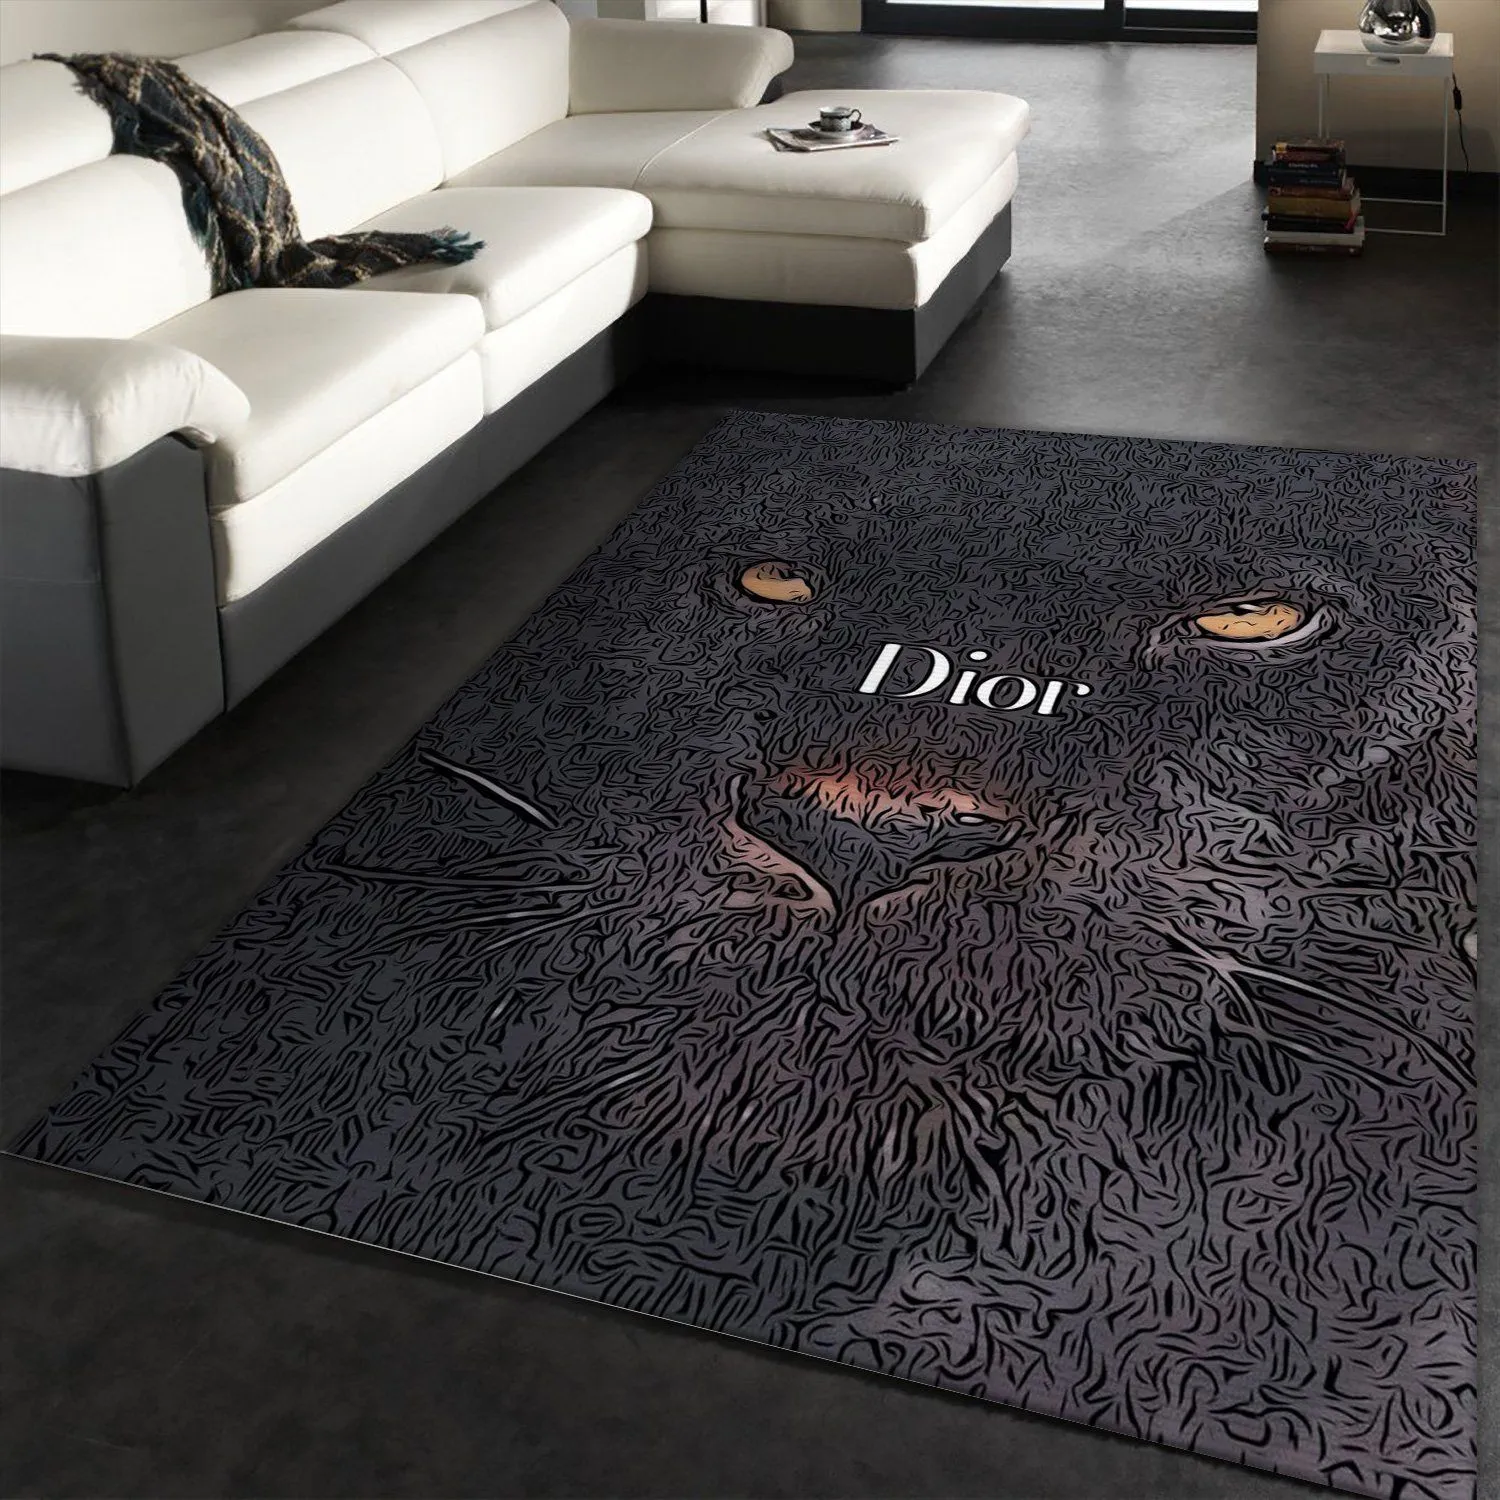 Dior Rectangle Rug Door Mat Fashion Brand Luxury Area Carpet Home Decor